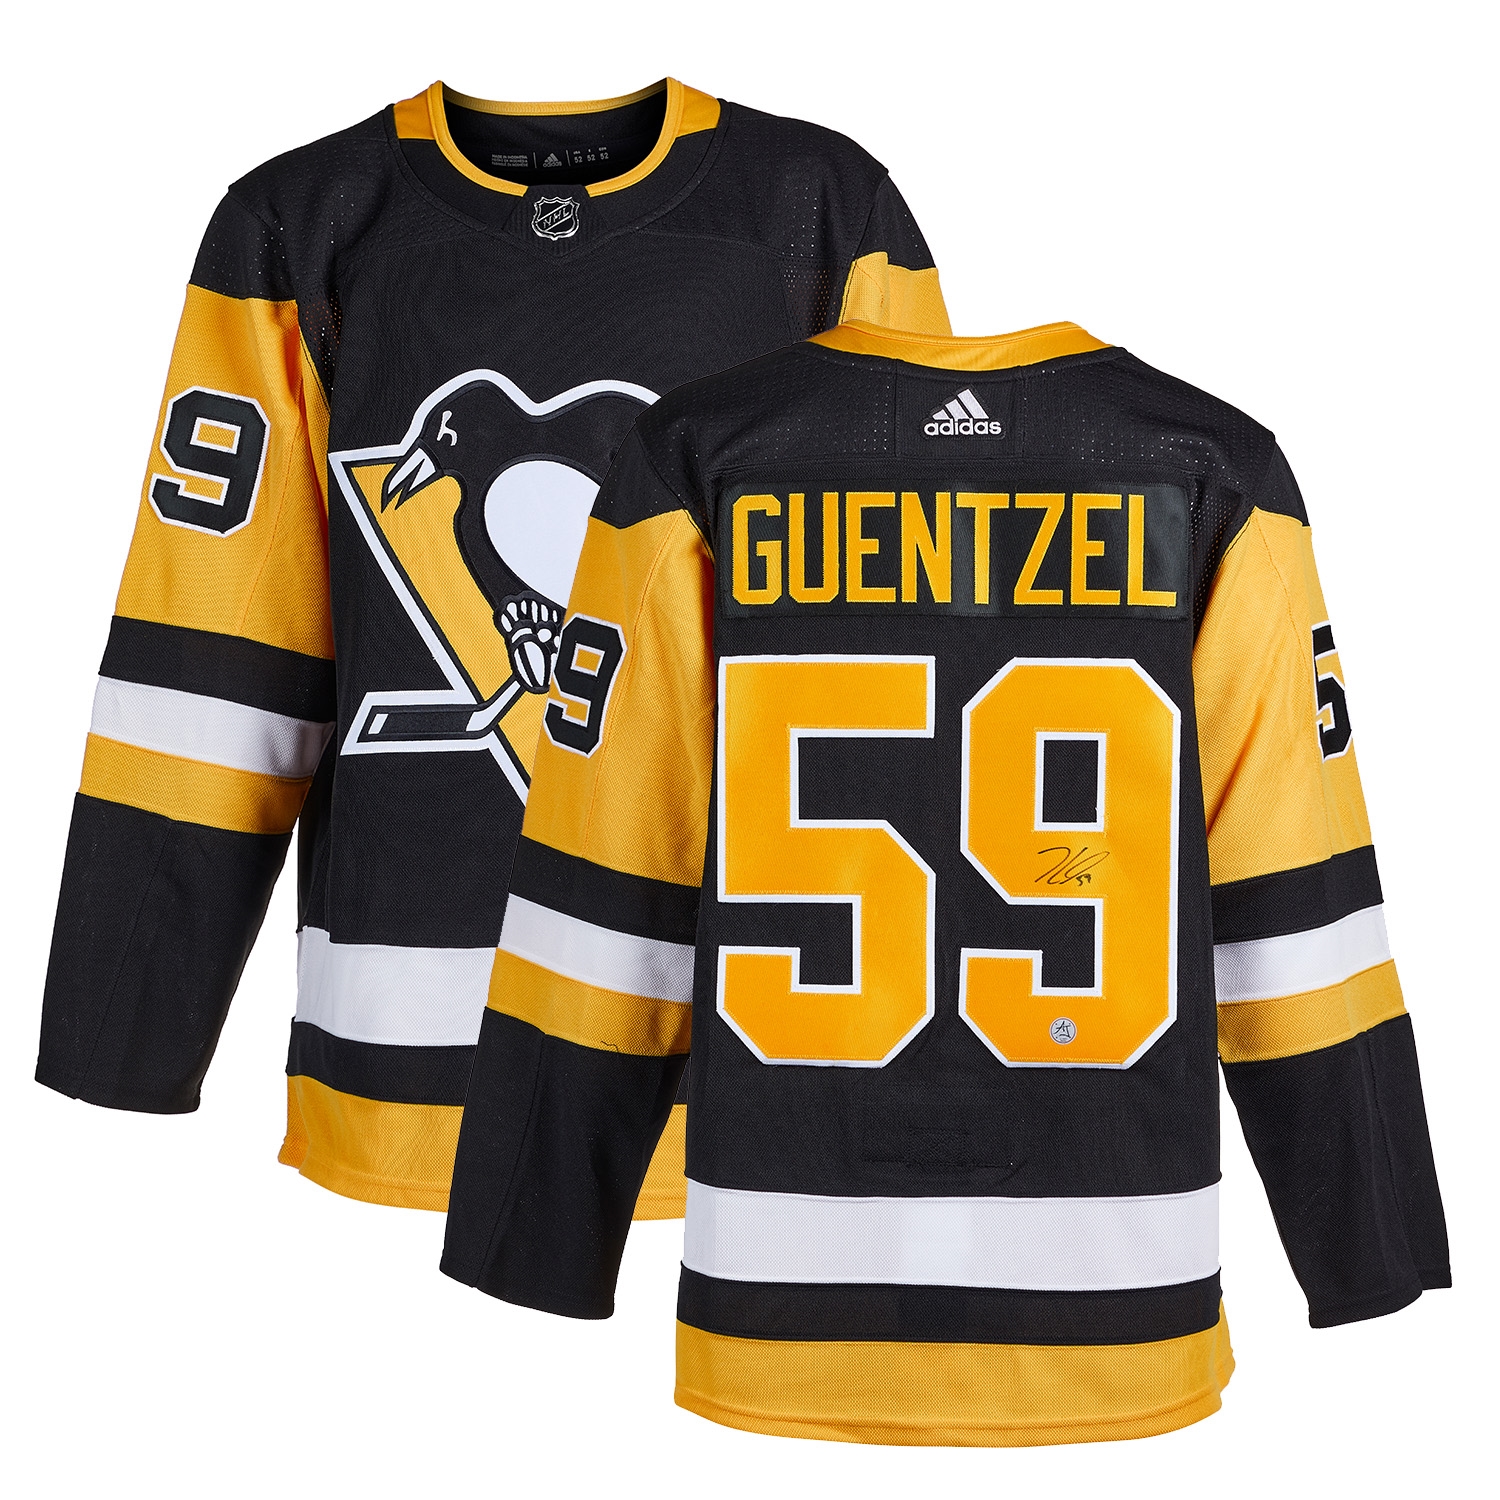 Jake Guentzel Autographed Pittsburgh Penguins adidas Jersey